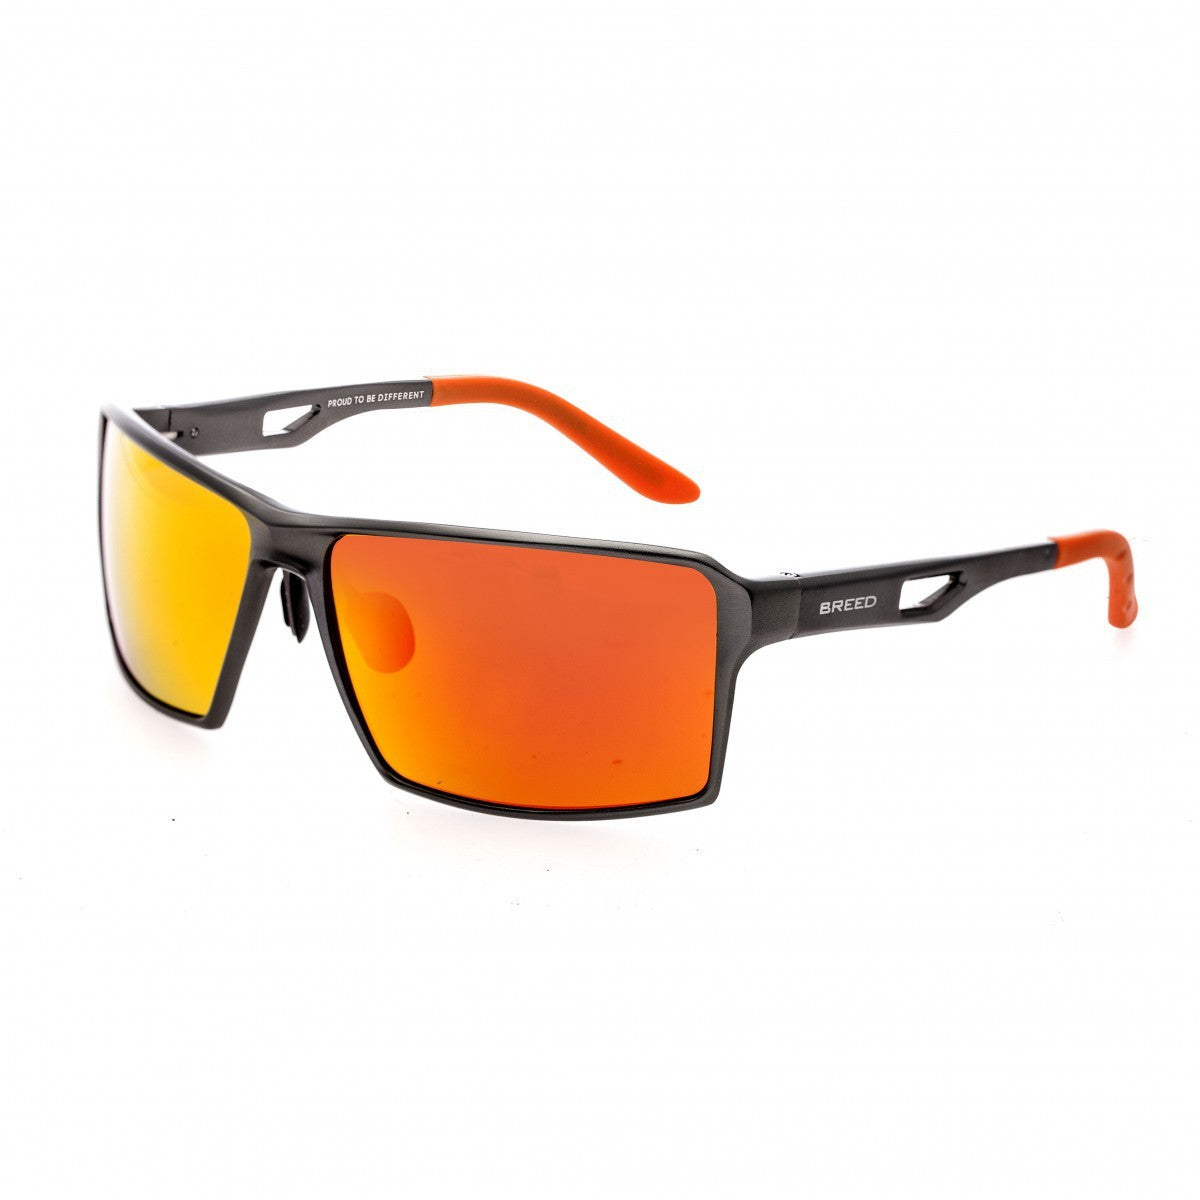 Breed Centaurus Aluminium Polarized Sunglasses - Gunmetal/Red-Yellow - BSG021DR